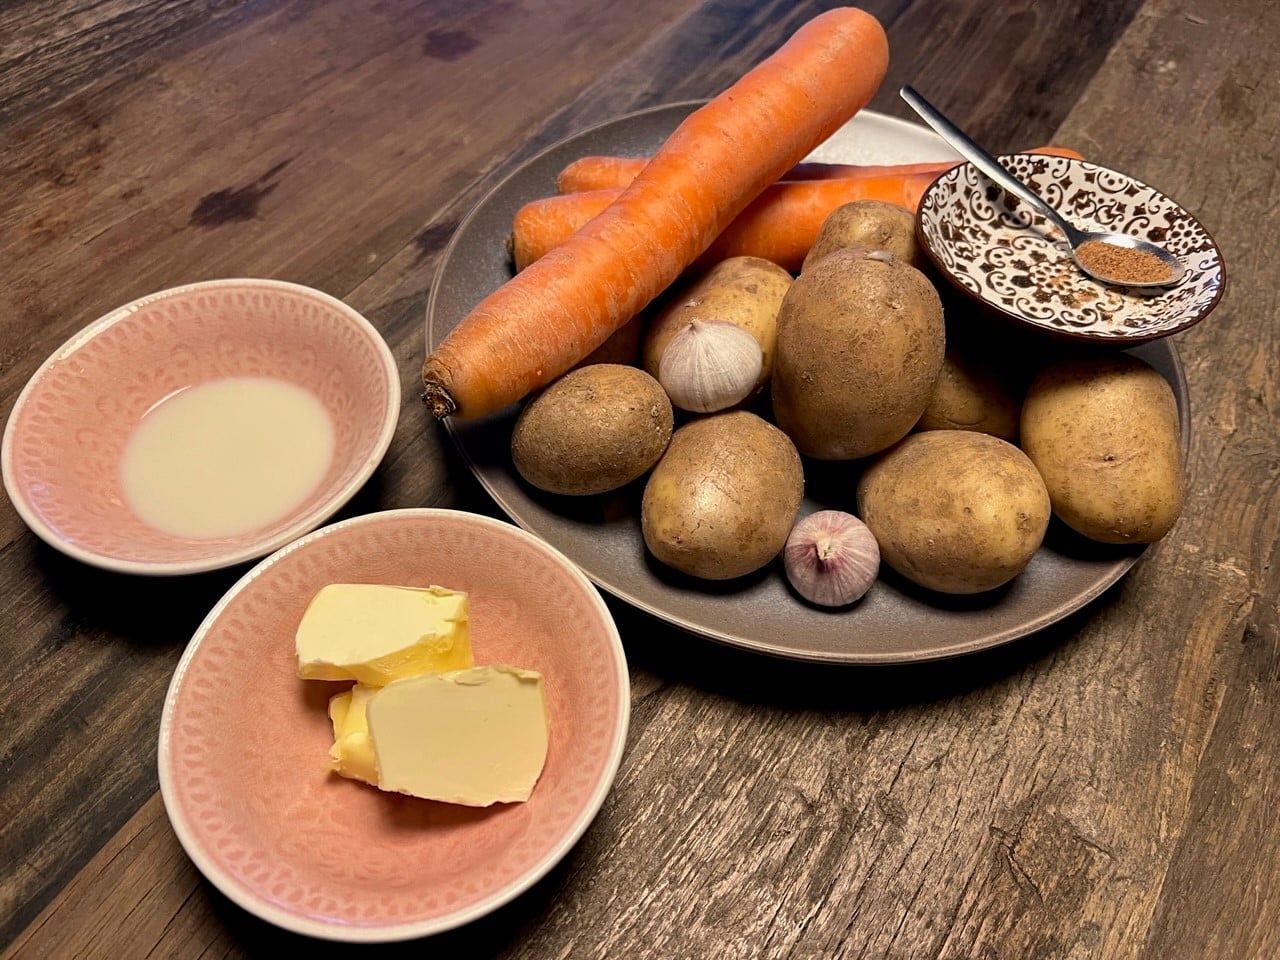 Mashed potatoes and carrots (hutspot)